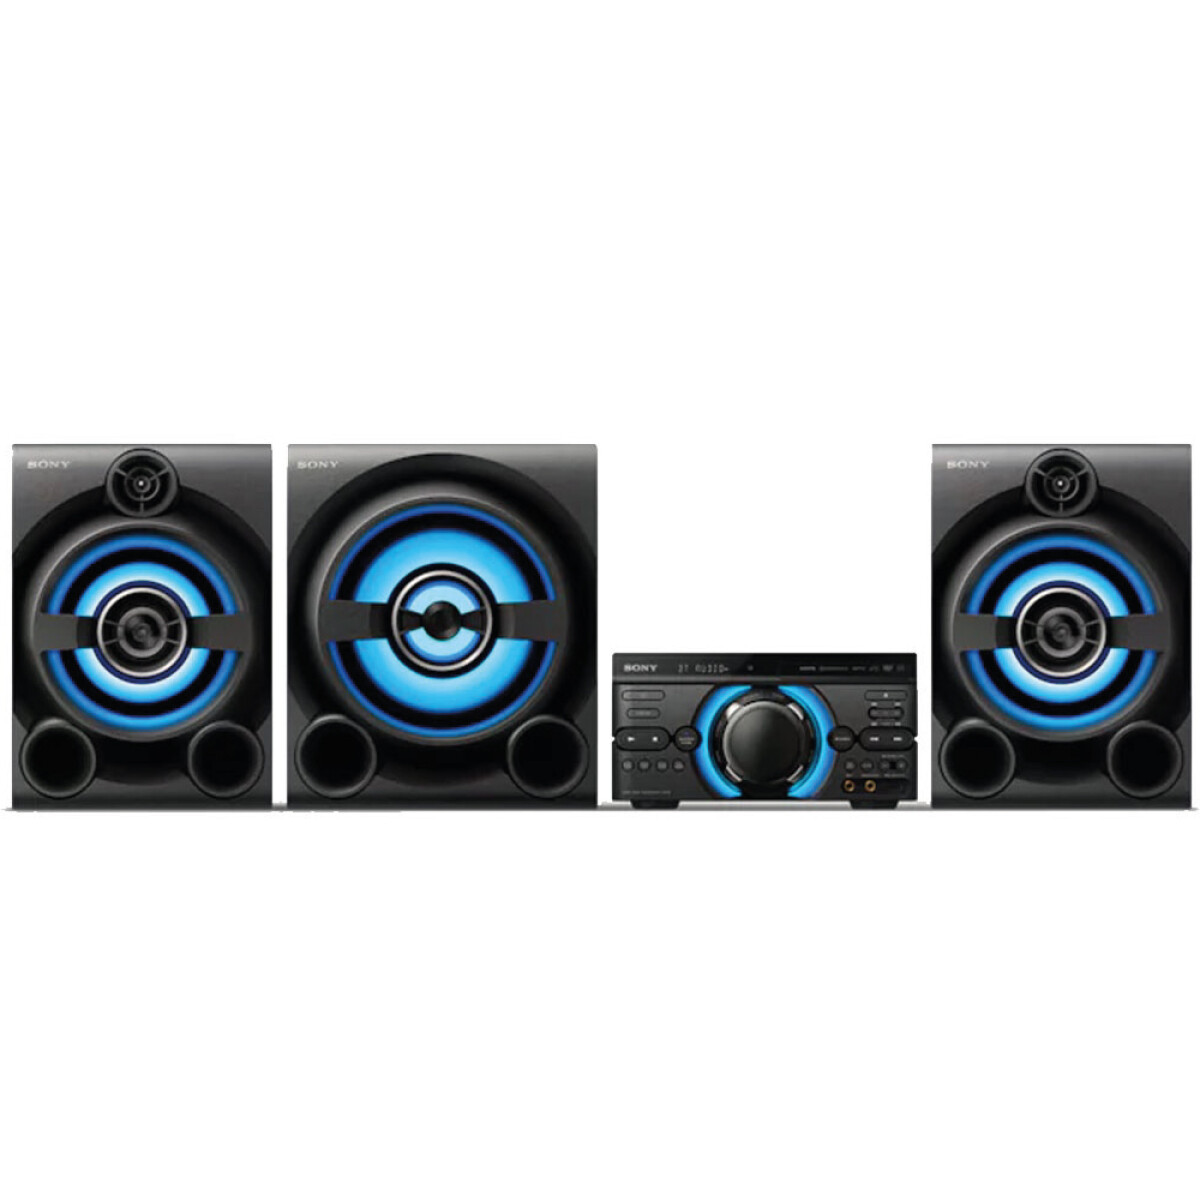 Sistema de audio SONY de alta potencia con DVD MHC-M80D 